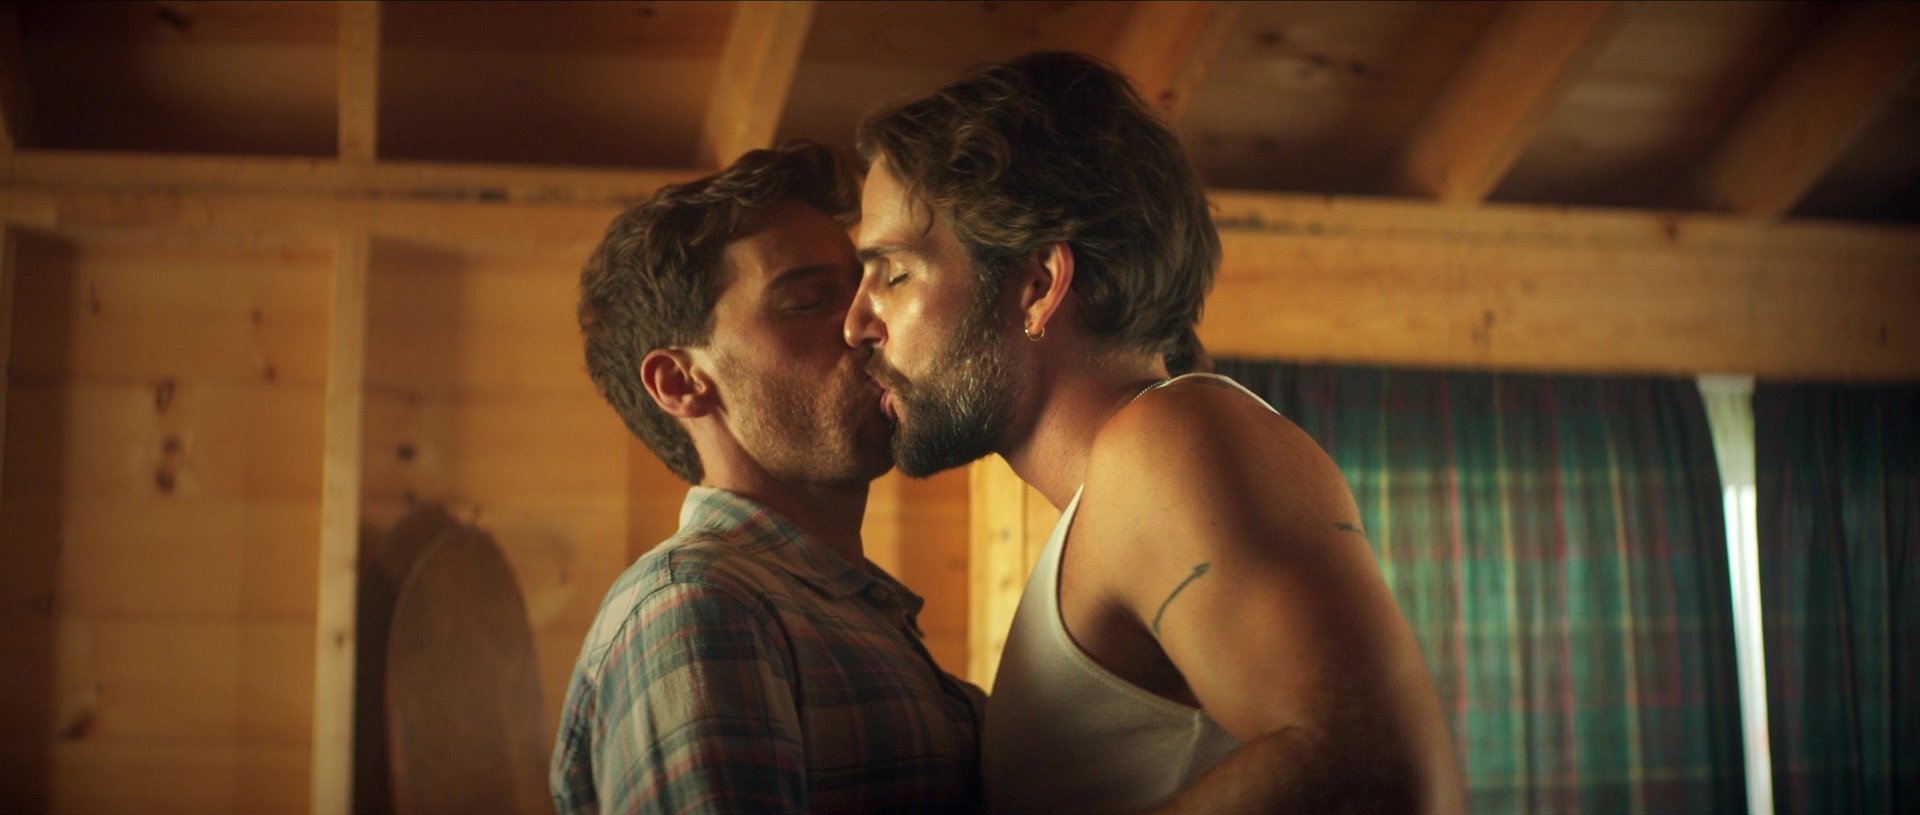 Denis Milne Sex Movie - Shirtless Men On The Blog: Travis Nelson & Jordan Gavaris & Jerry  O'Connell: Scena Gay